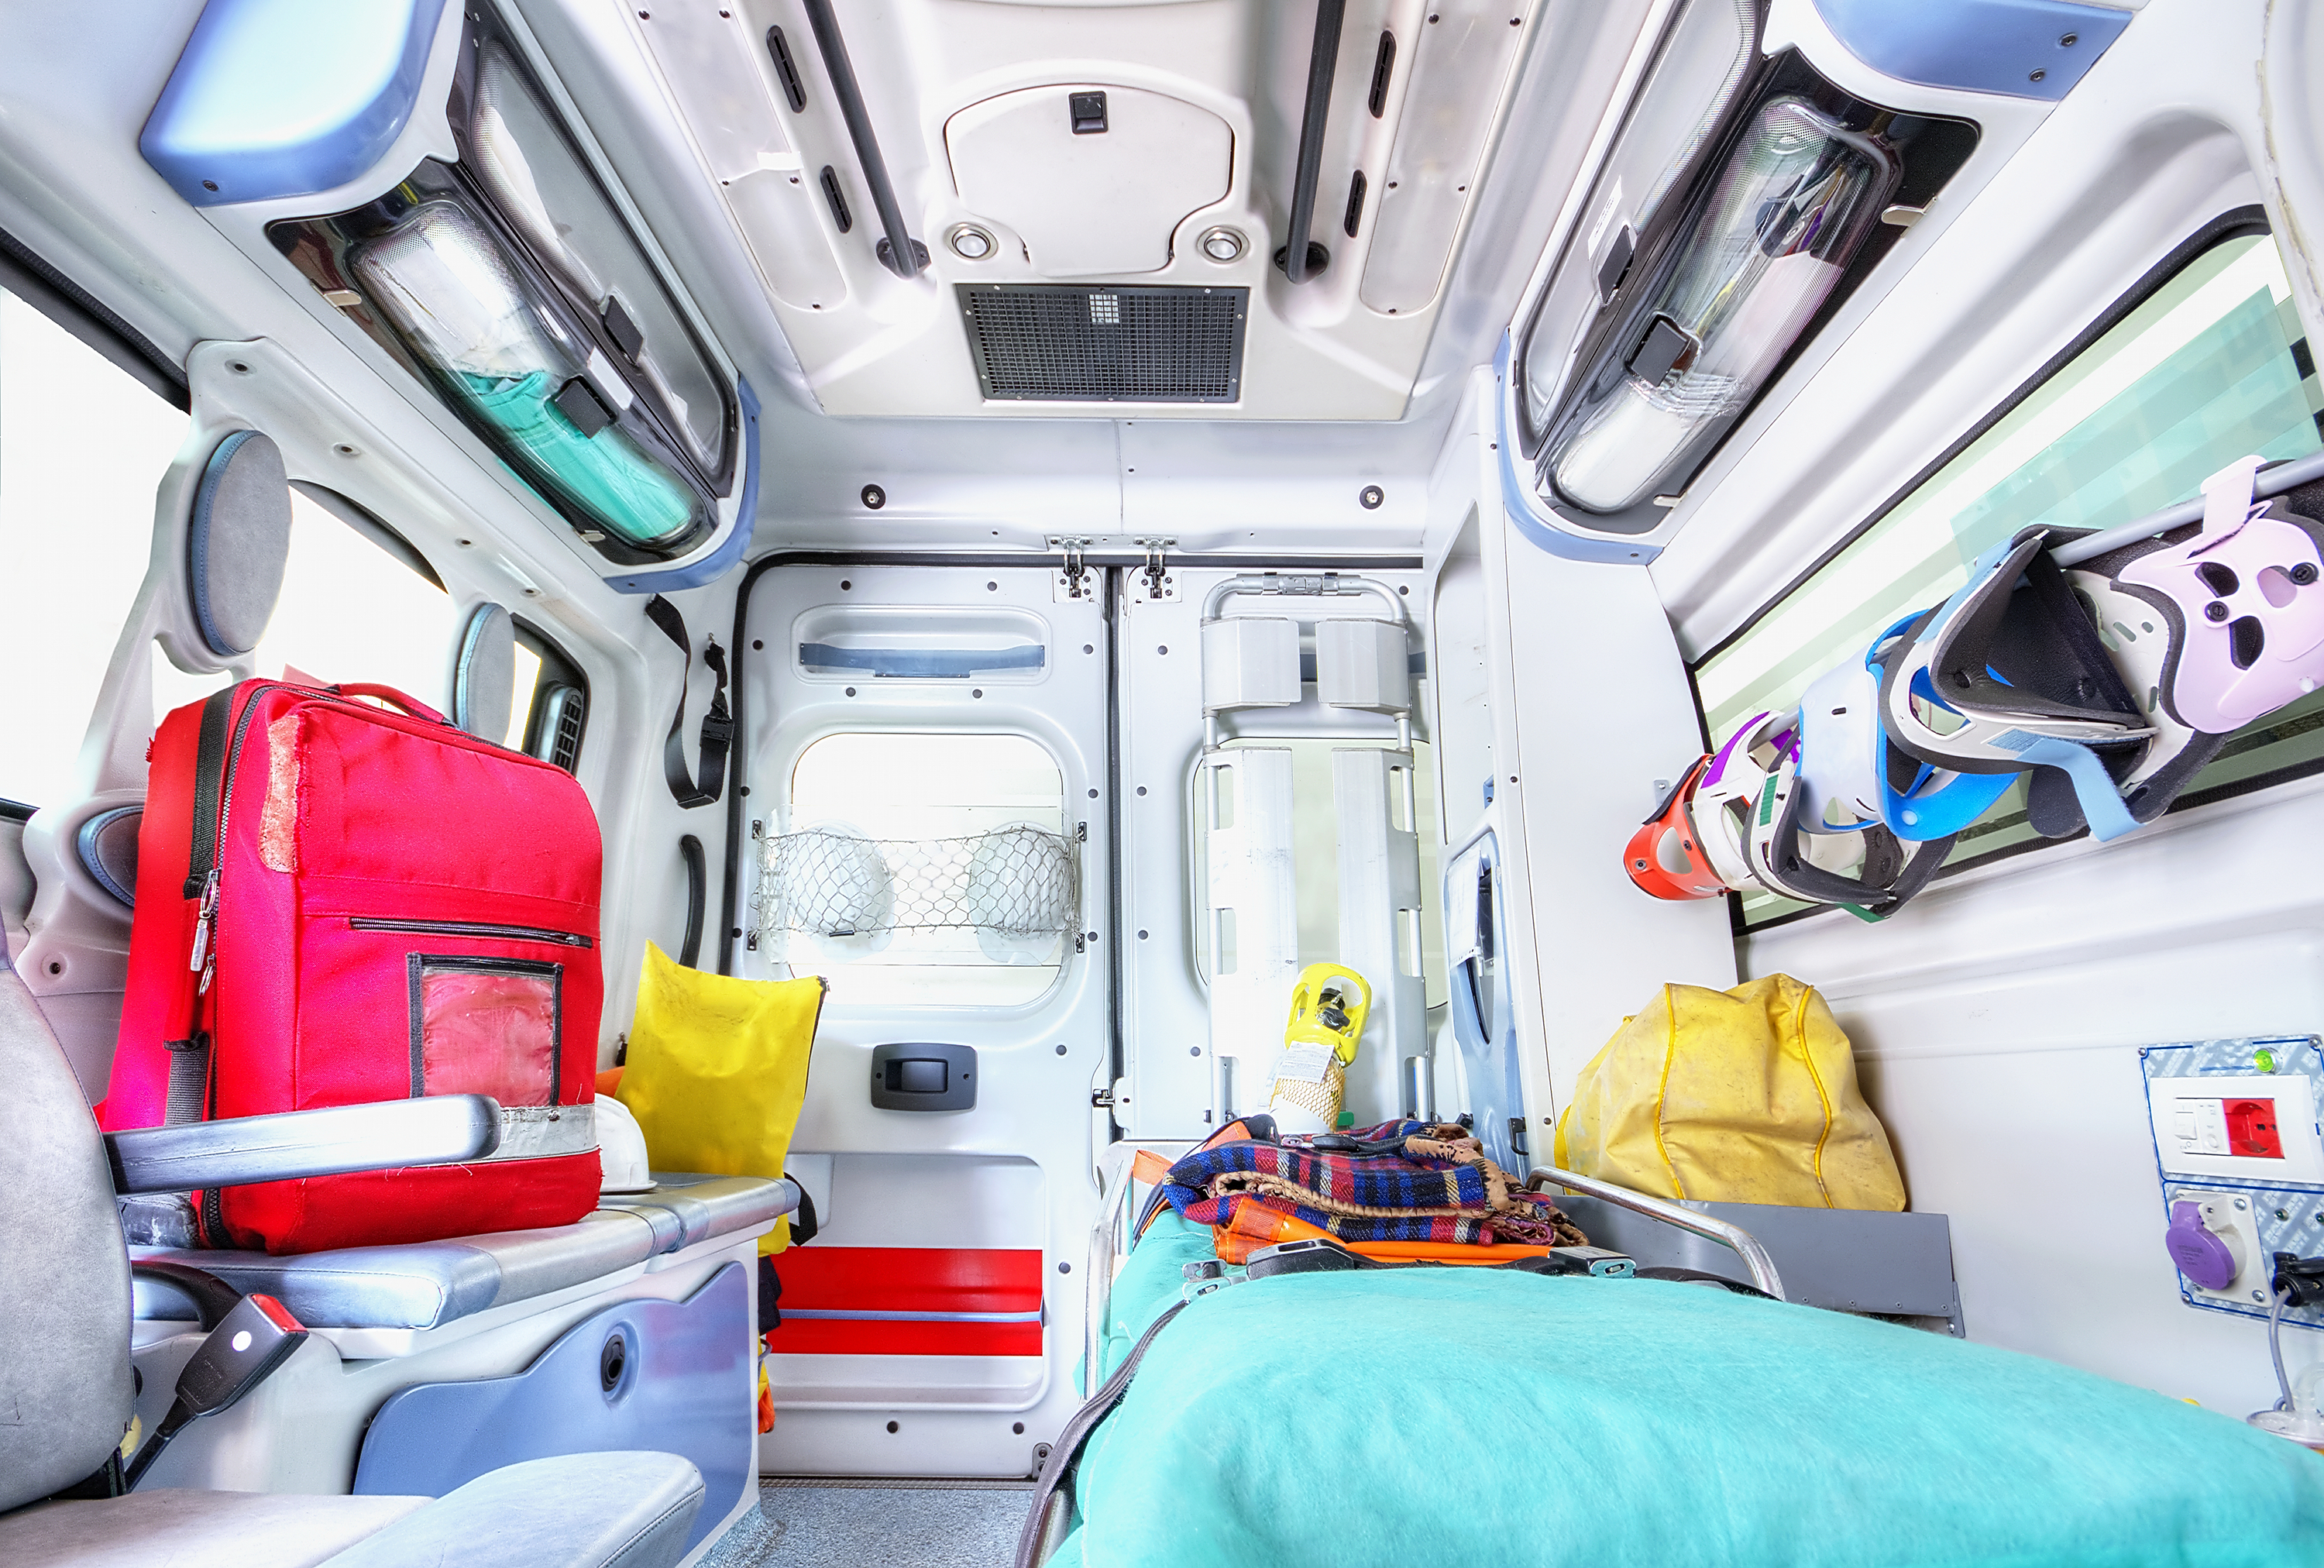 Interior of an ambulance | Source: Shutterstock